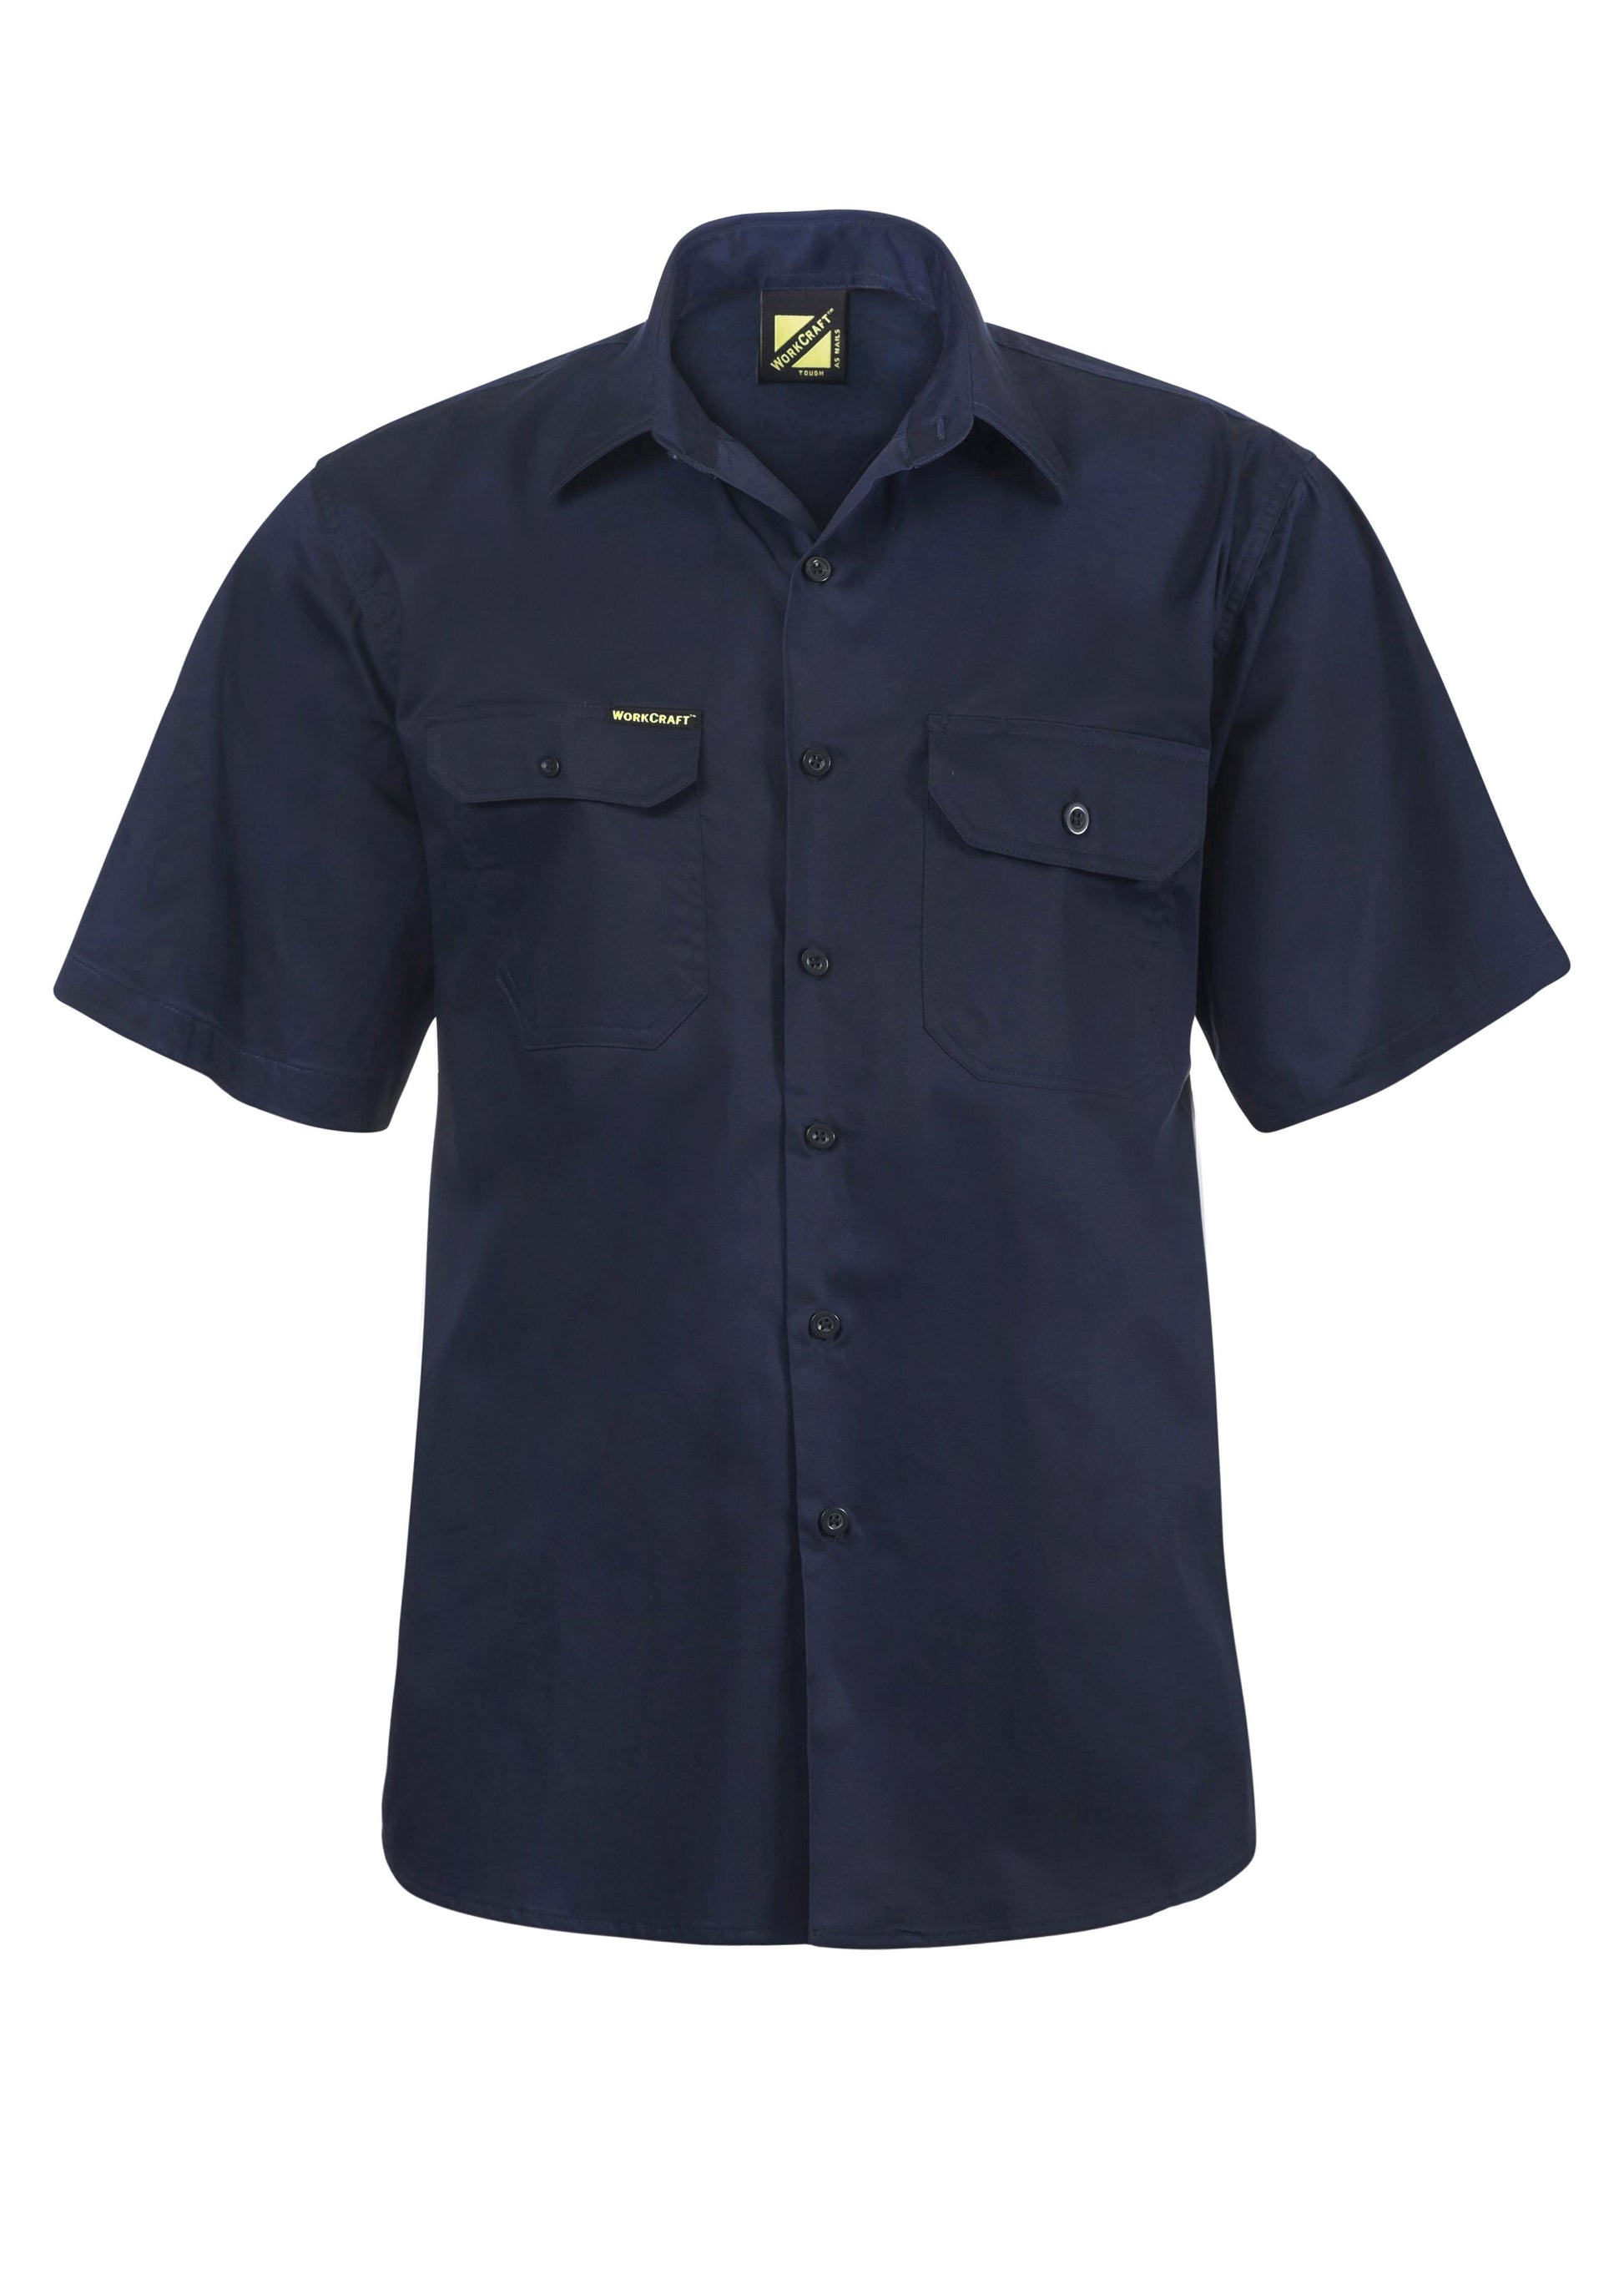 NCC APPAREL WS4012 Full Colour Vented S/S Shirt - Star Uniforms Australia